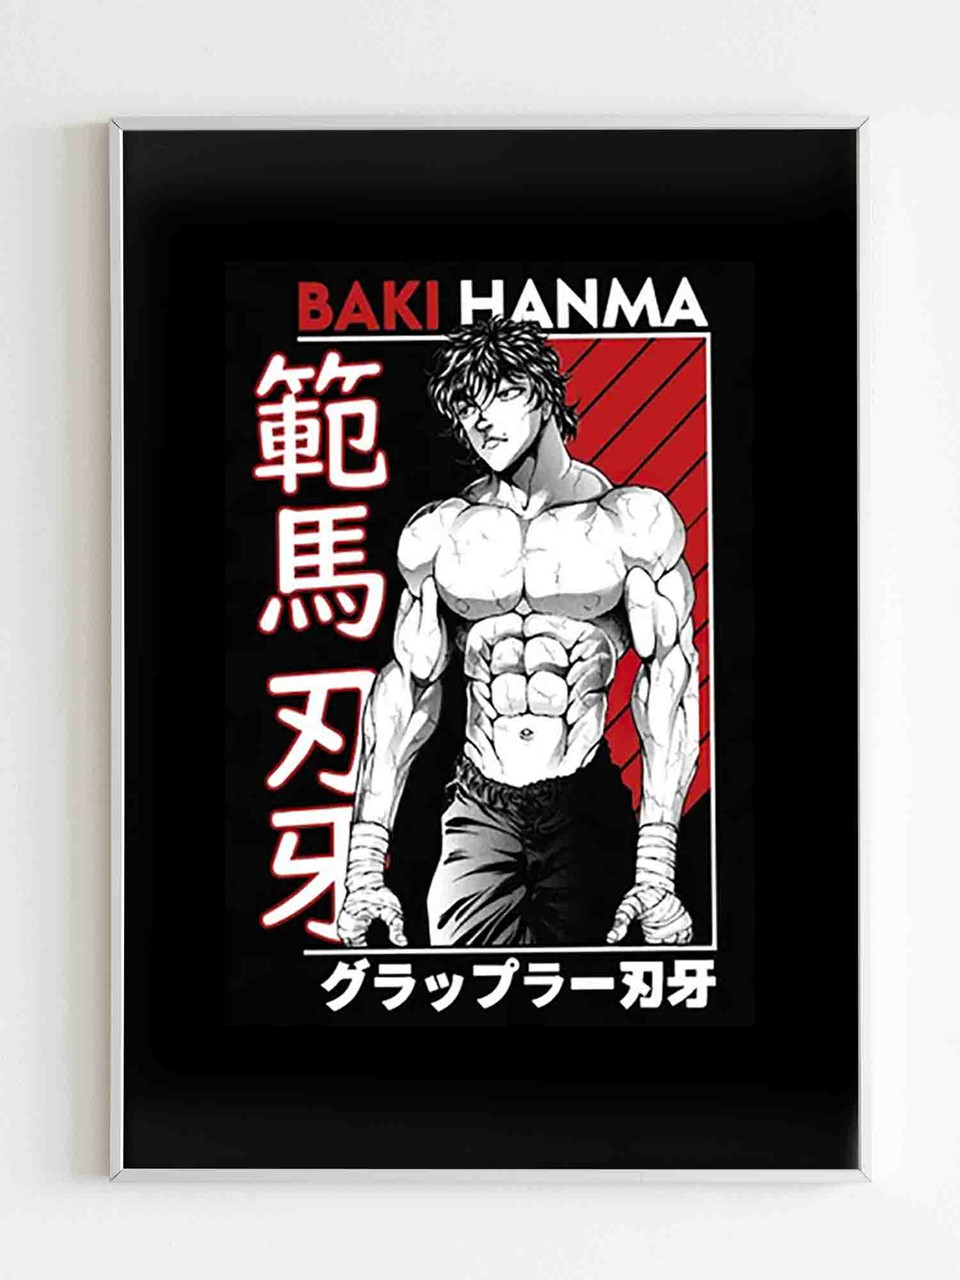 Baki Hanma's Anime Might Not Return And That's Ok